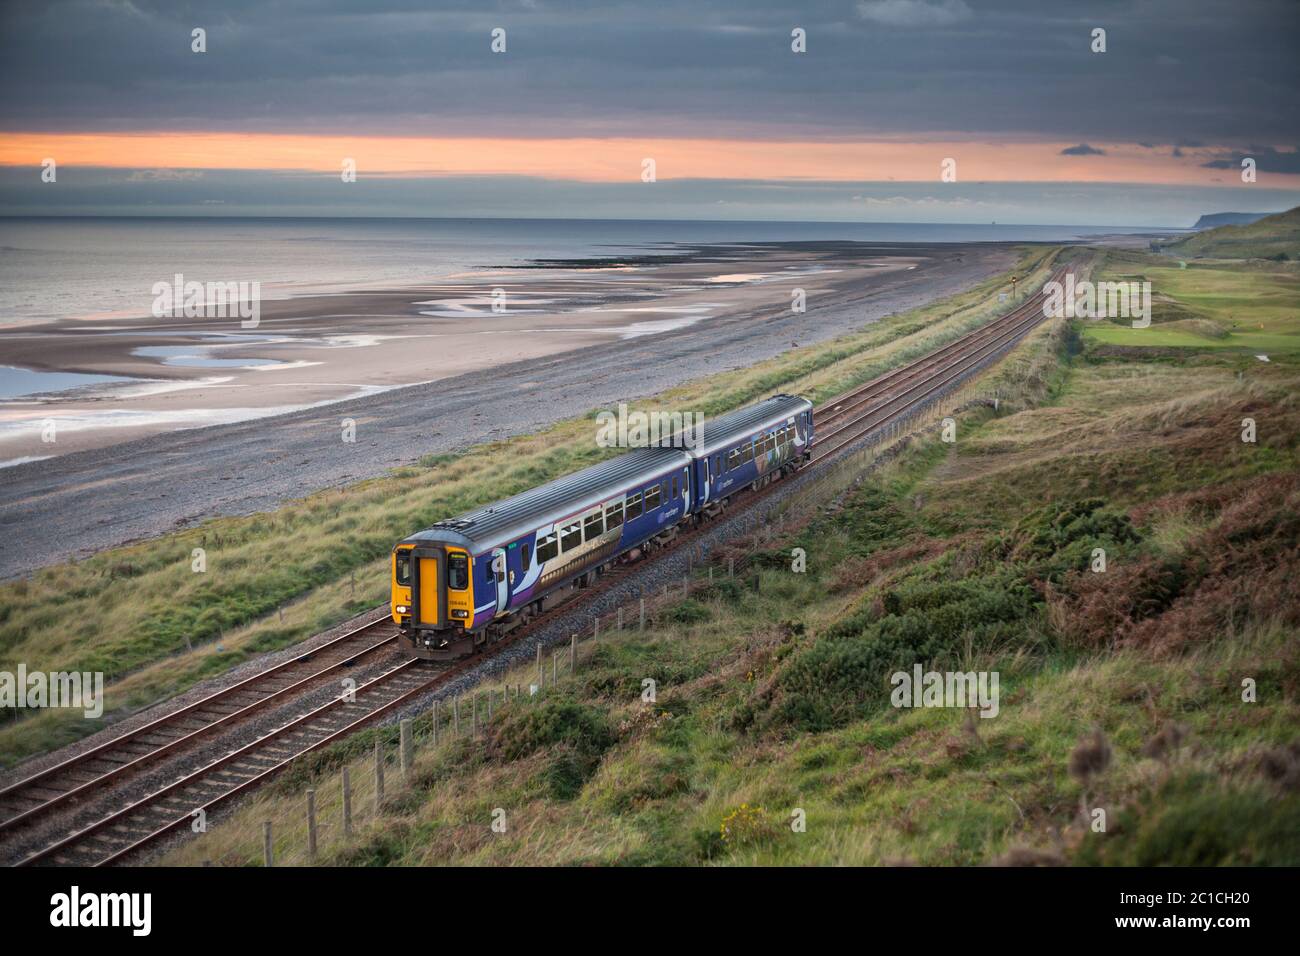 Northern Rail class 156 sprinter train passing Seascale beach on the scenic Cumbrian coast railway line. Stock Photo